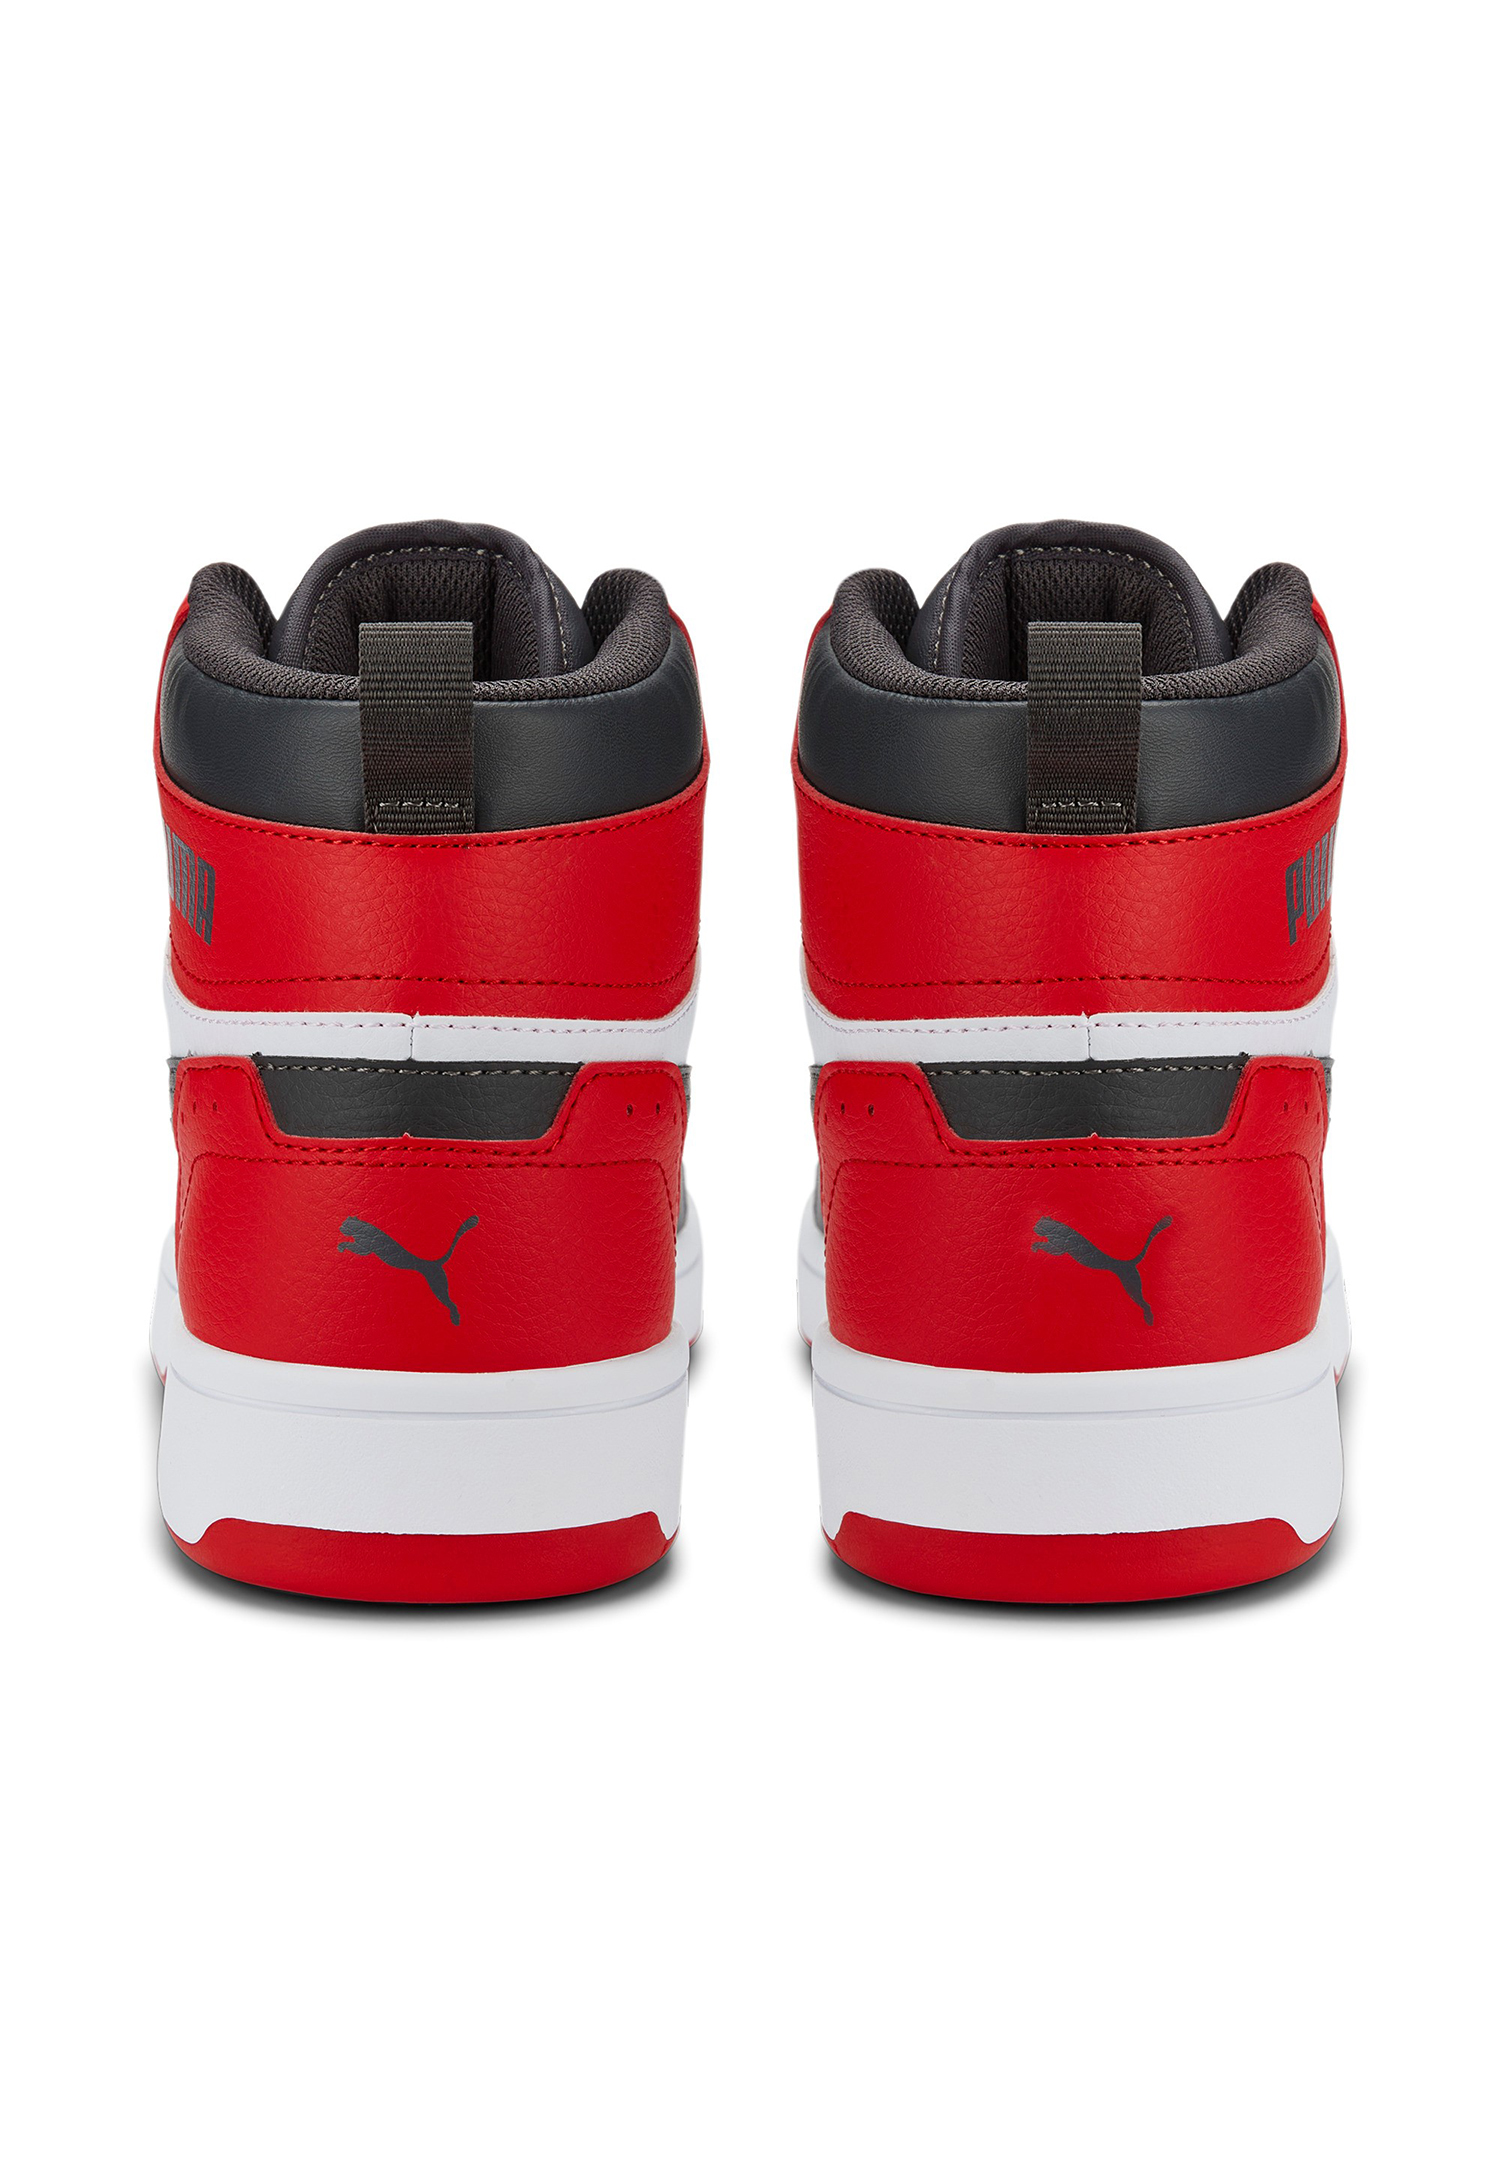 Puma Rebound JOY High Top Herren Sneaker Sportschuh 374765 weiss/grau/rot